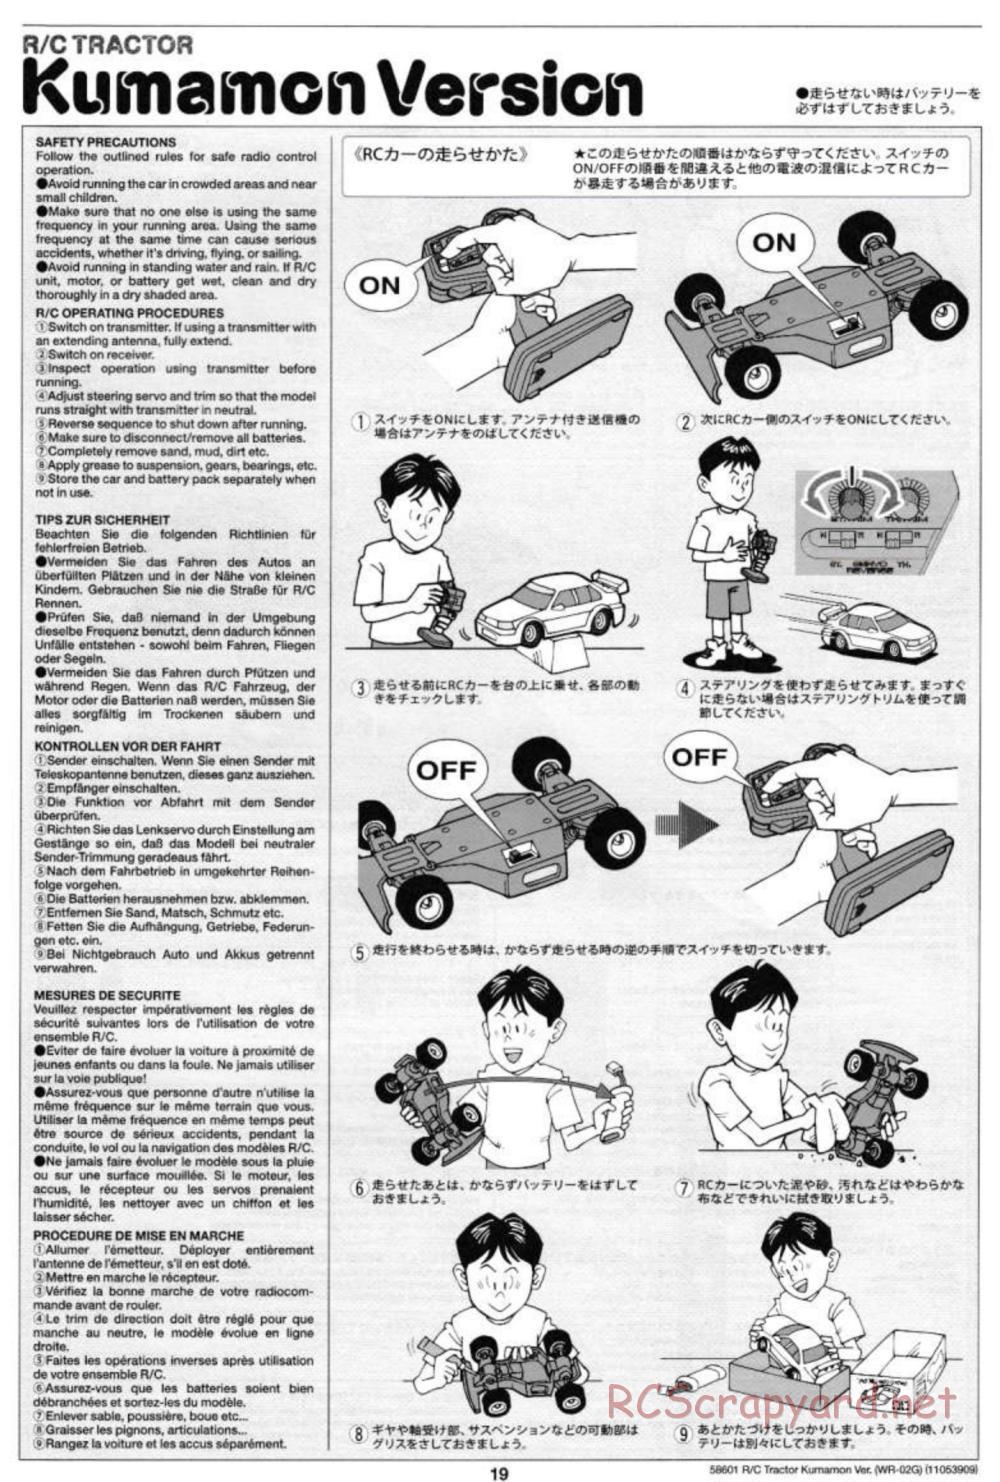 Tamiya - Tractor Kumamon Version Chassis - Manual - Page 19